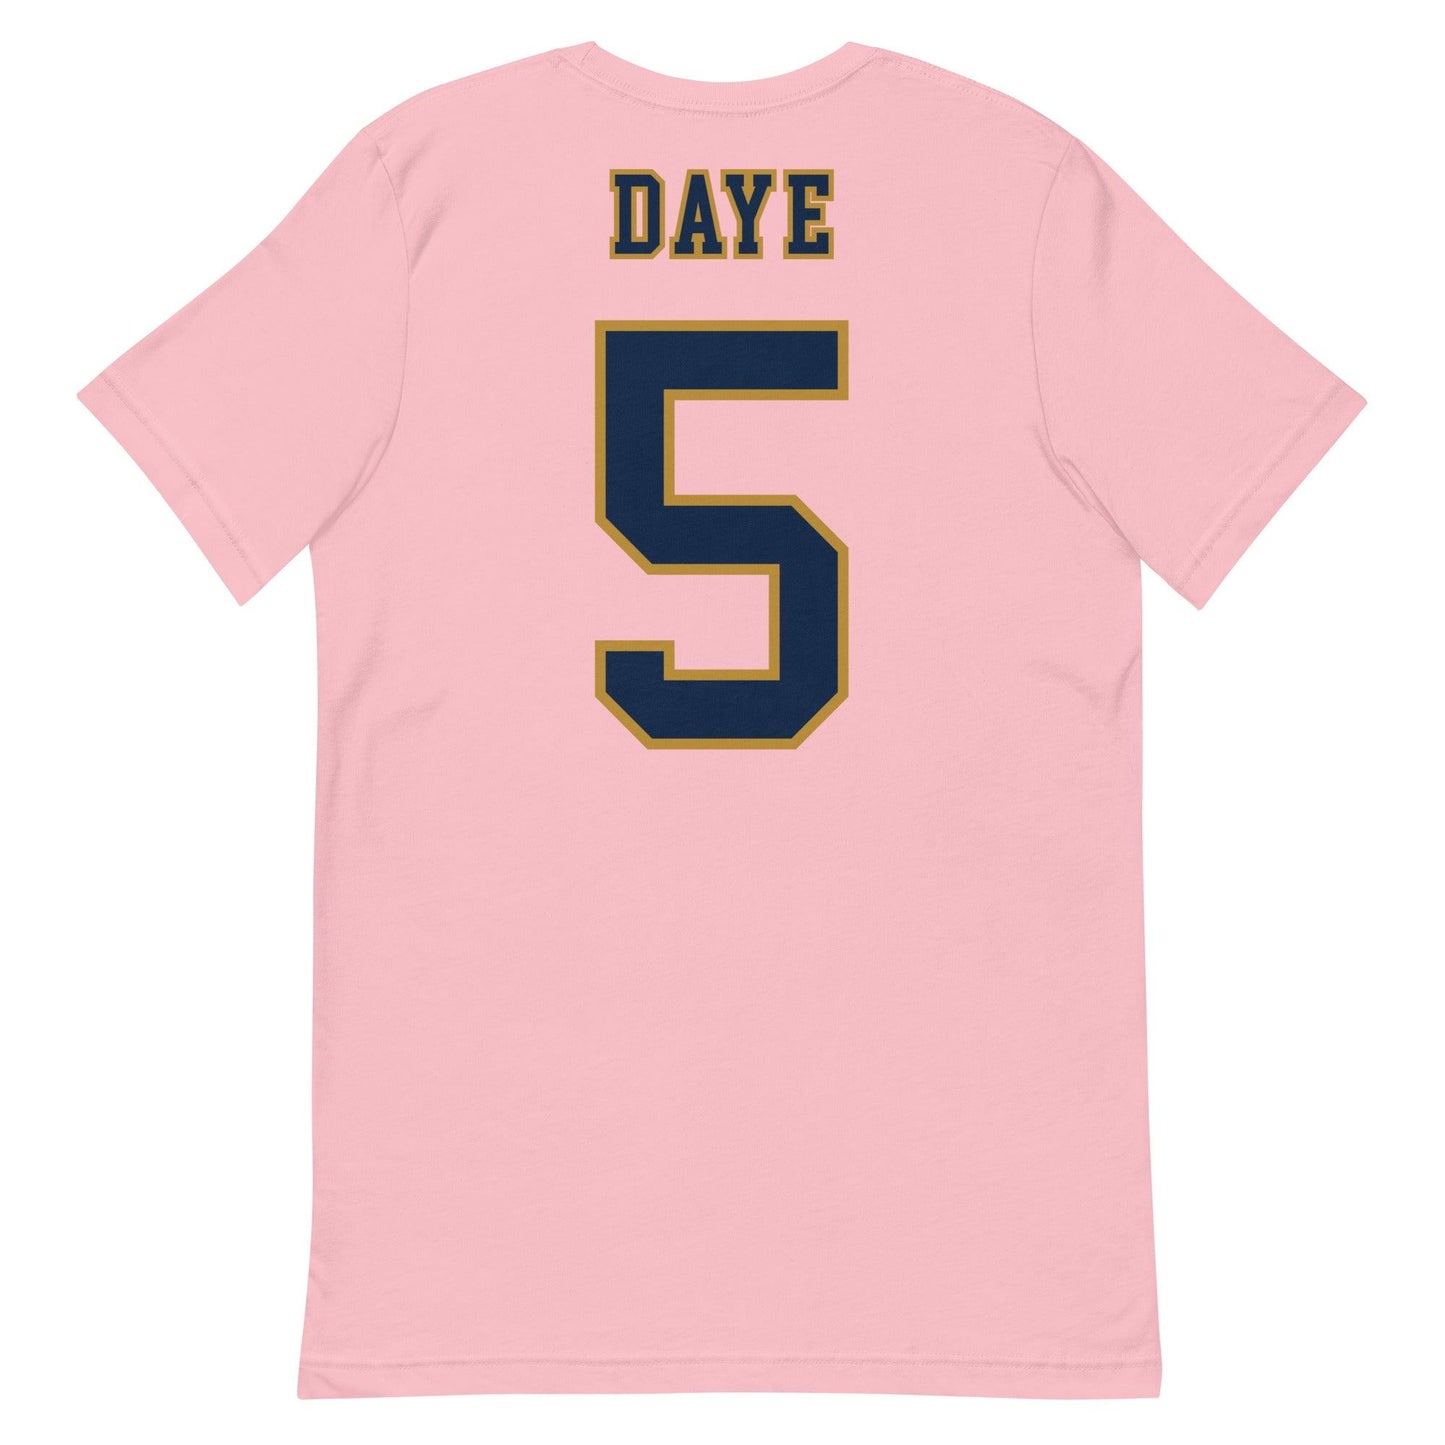 Antonio Daye "Jersey" t-shirt - Fan Arch